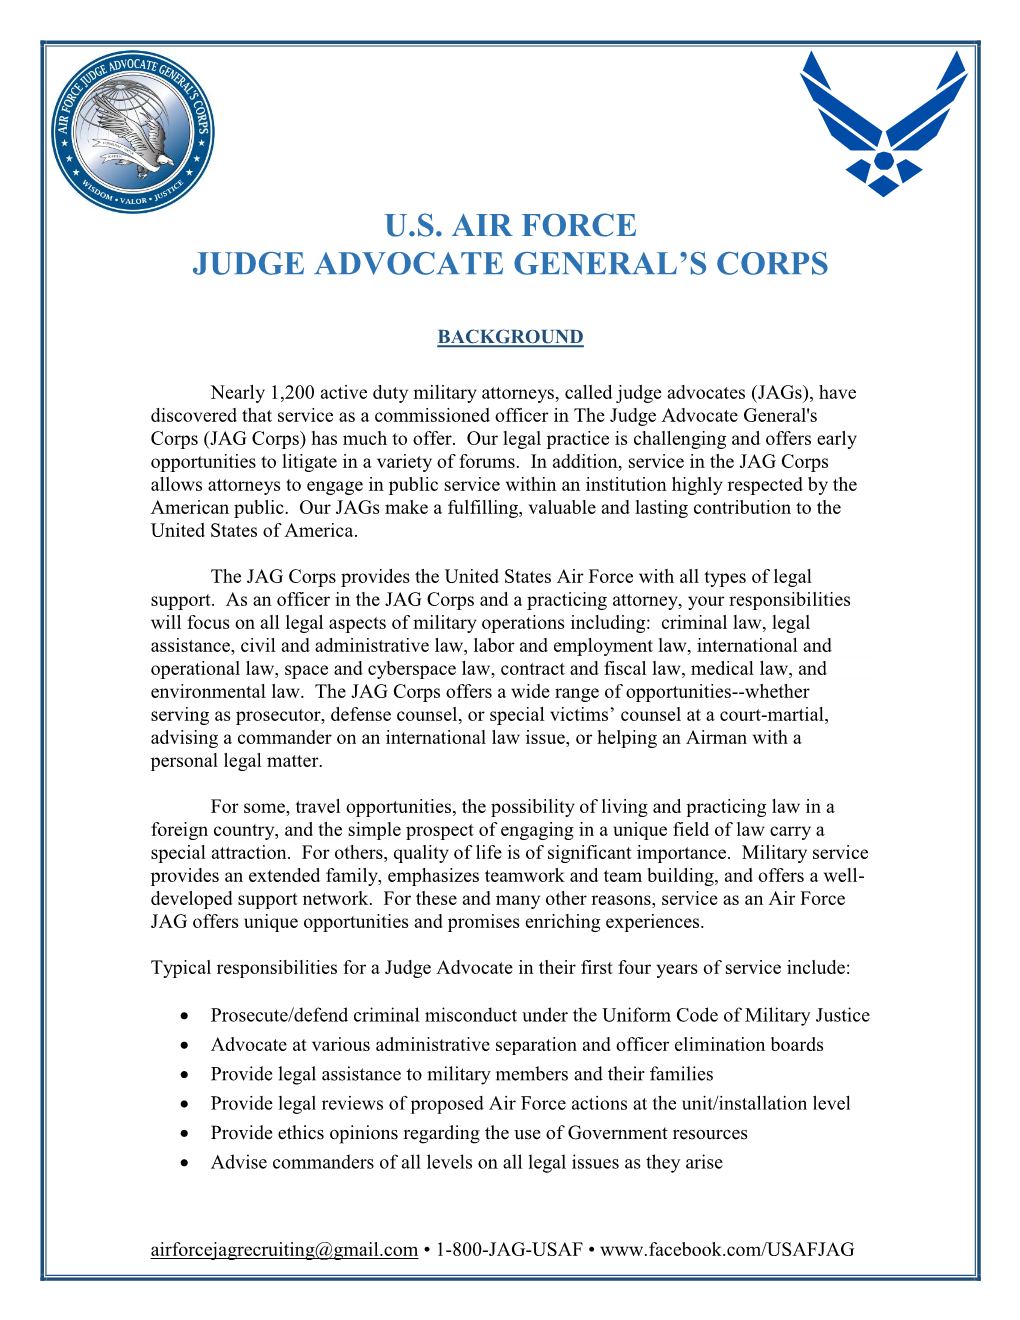 U.S. Air Force Judge Advocate General's Corps